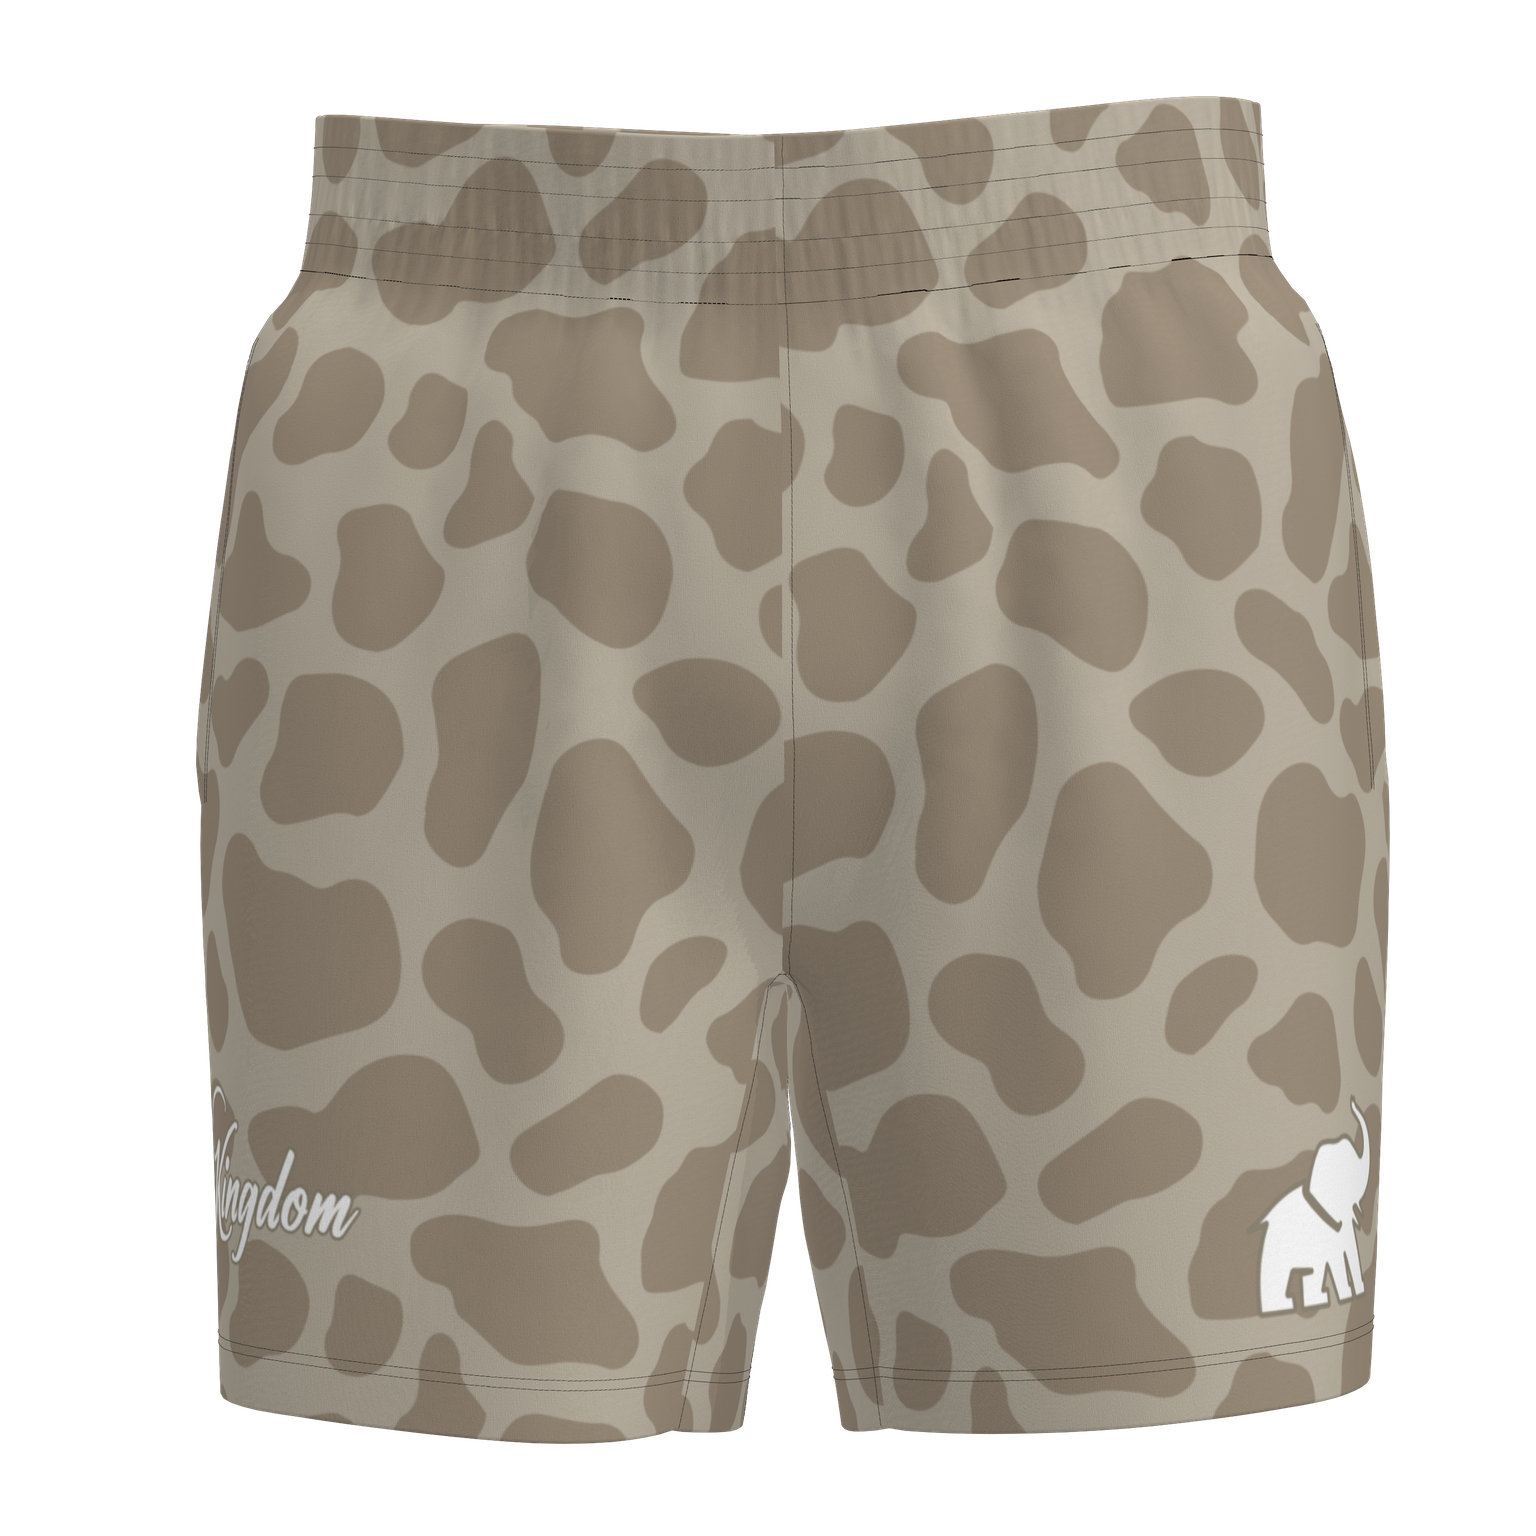 Kingdom Mesh Shorts - Giraffe Print